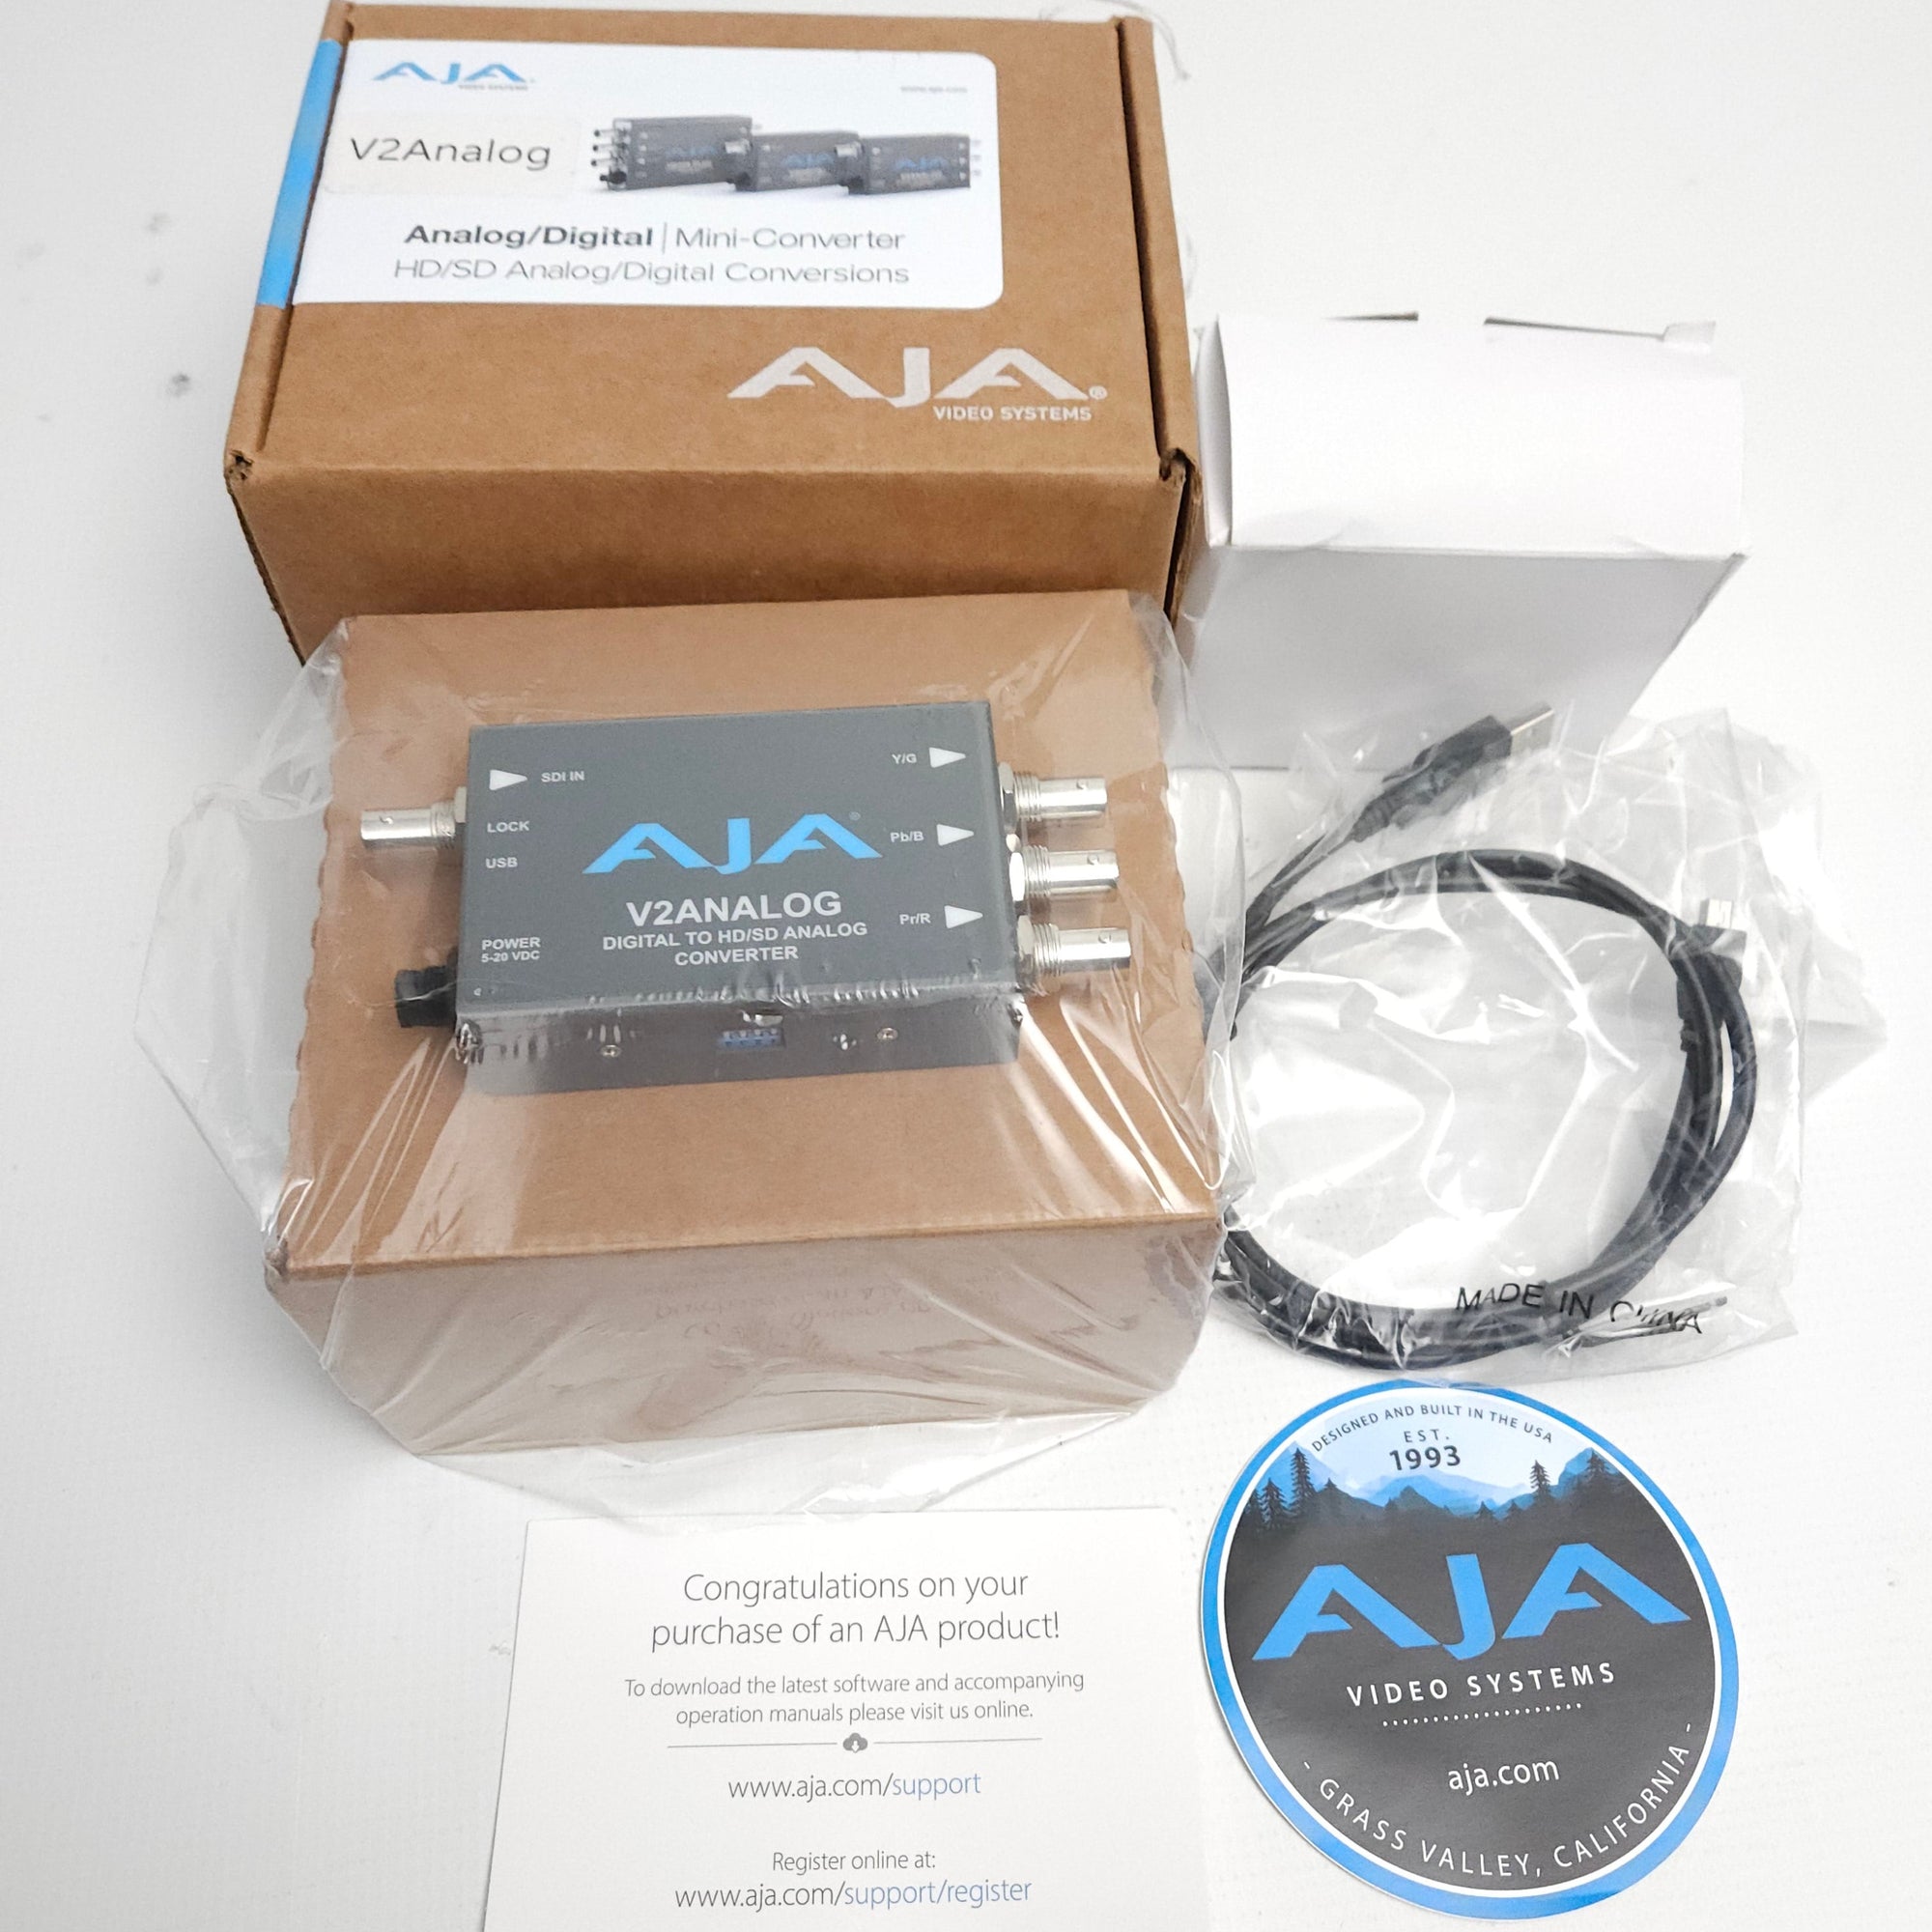 AJA V2Analog Analog/Digital Mini Converter for HD/SD